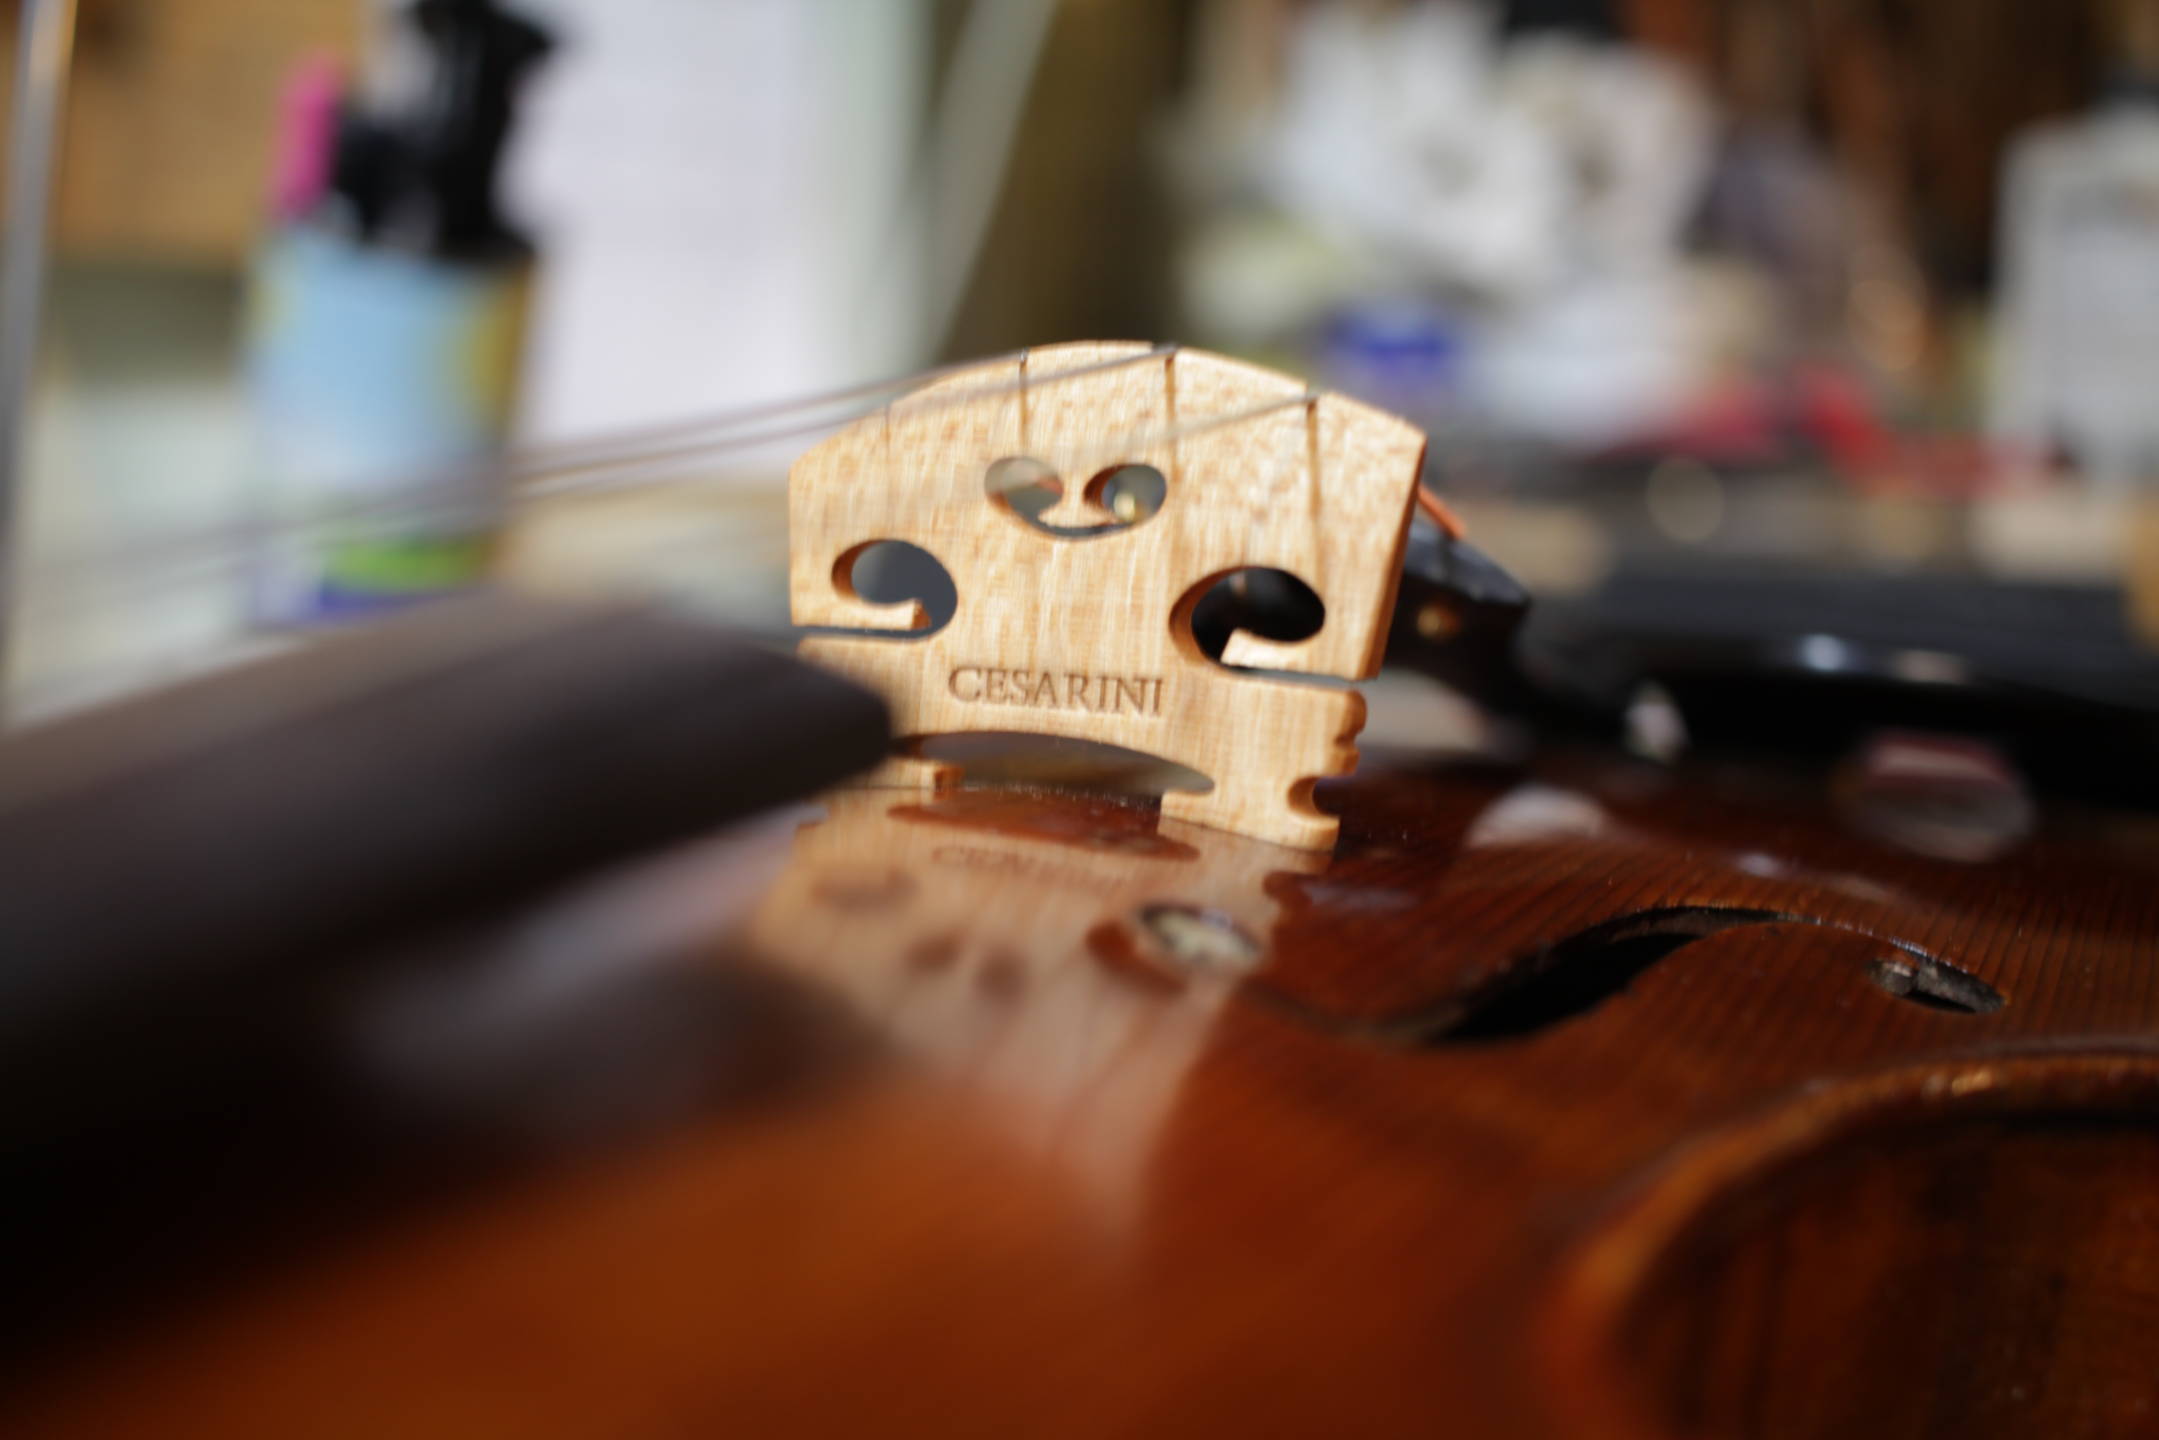 Bonus Stradivari